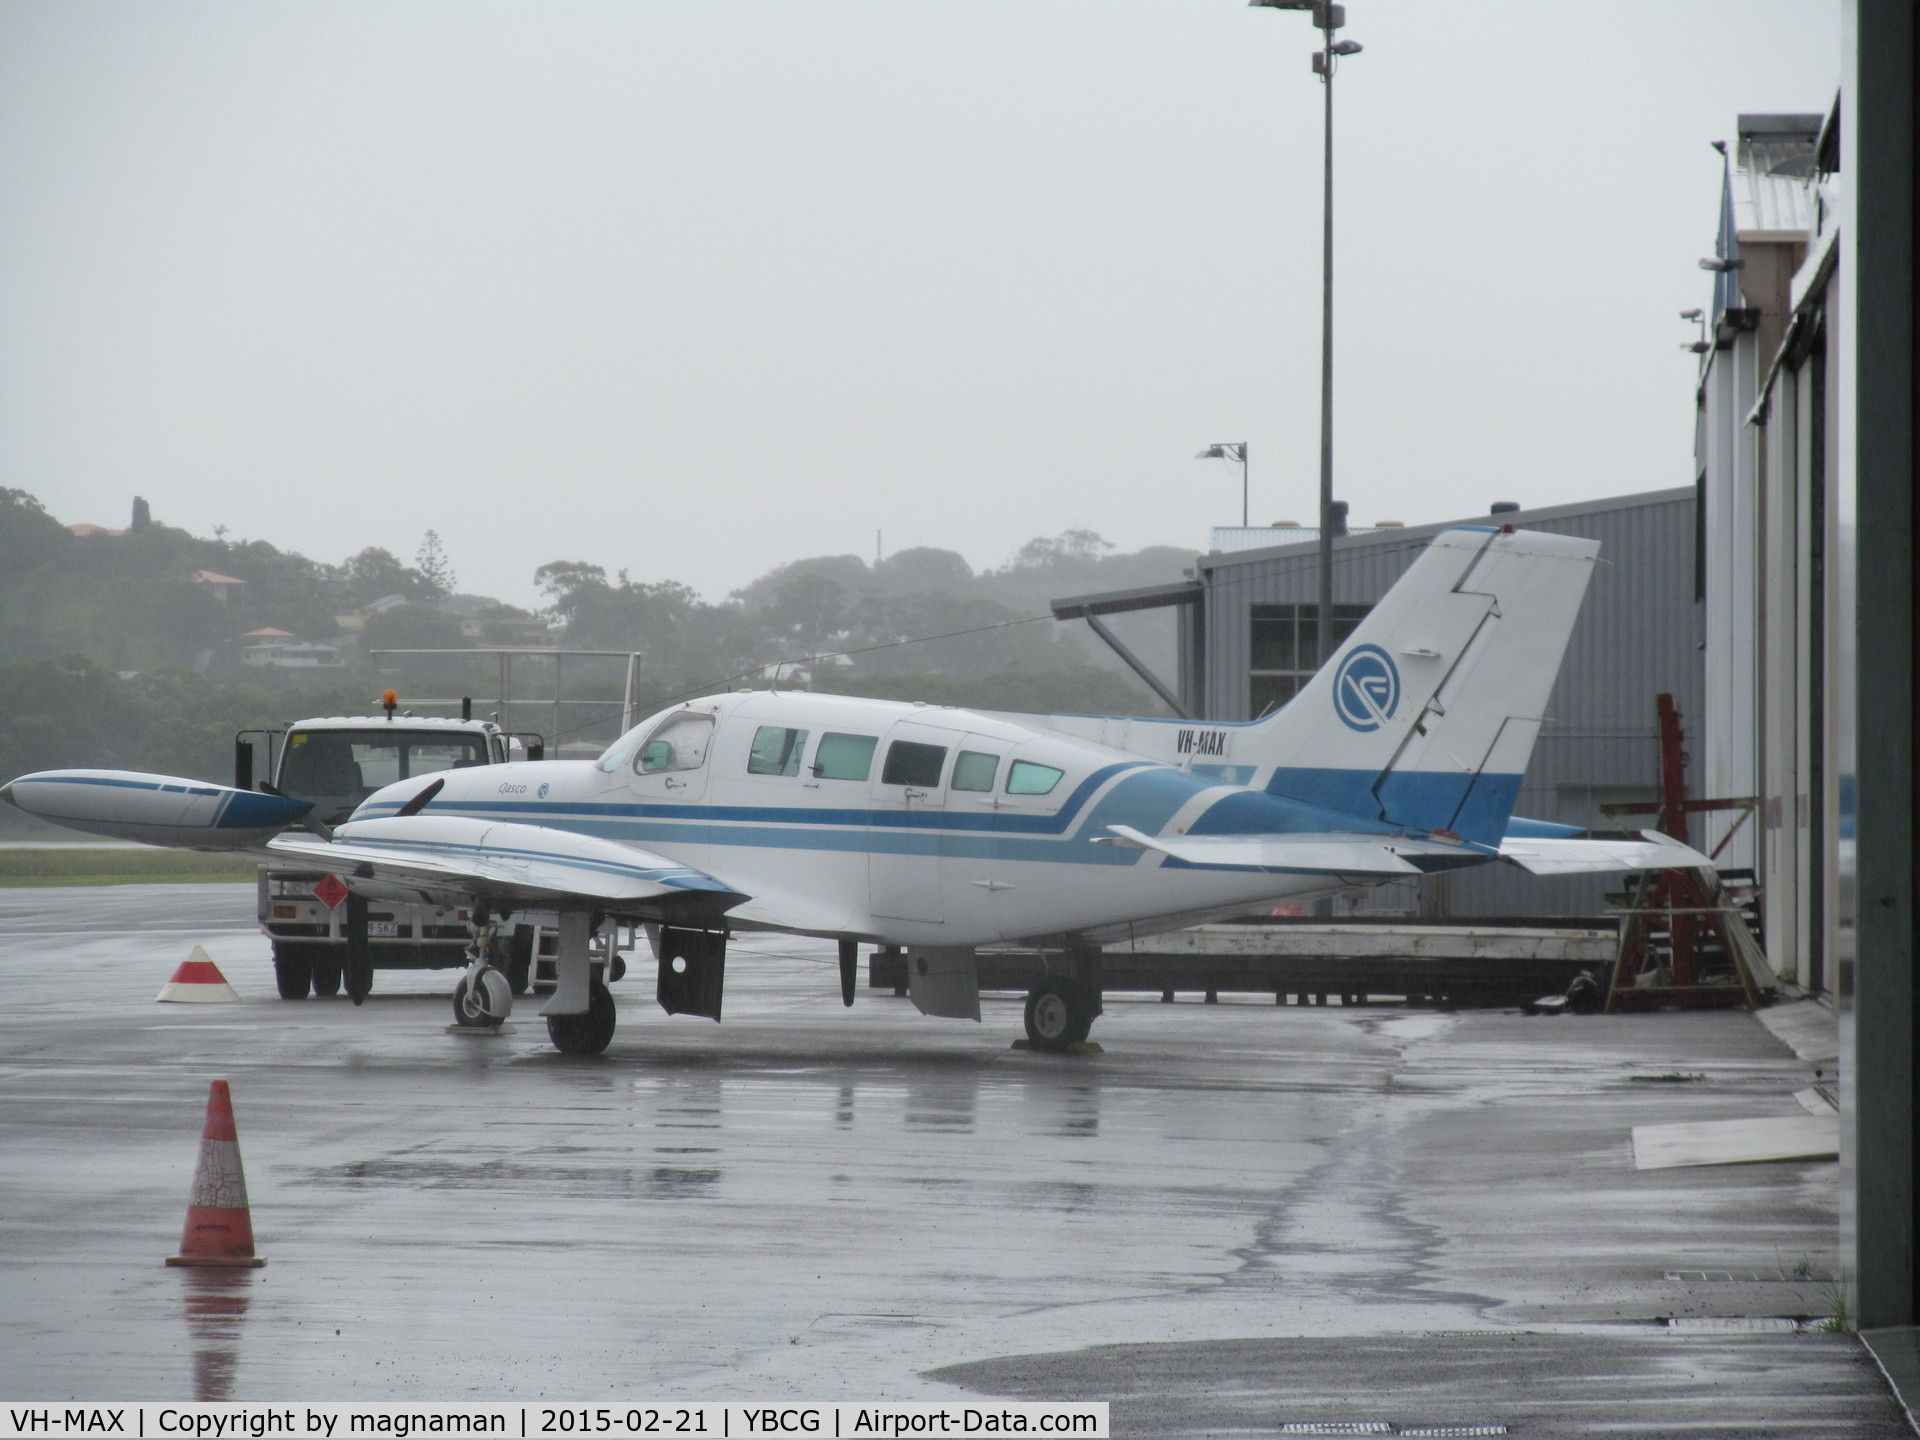 VH-MAX, 1976 Cessna 402B C/N 402B1018, Nice old twin in rain at Coolangatta - AKA Gold Coast airport